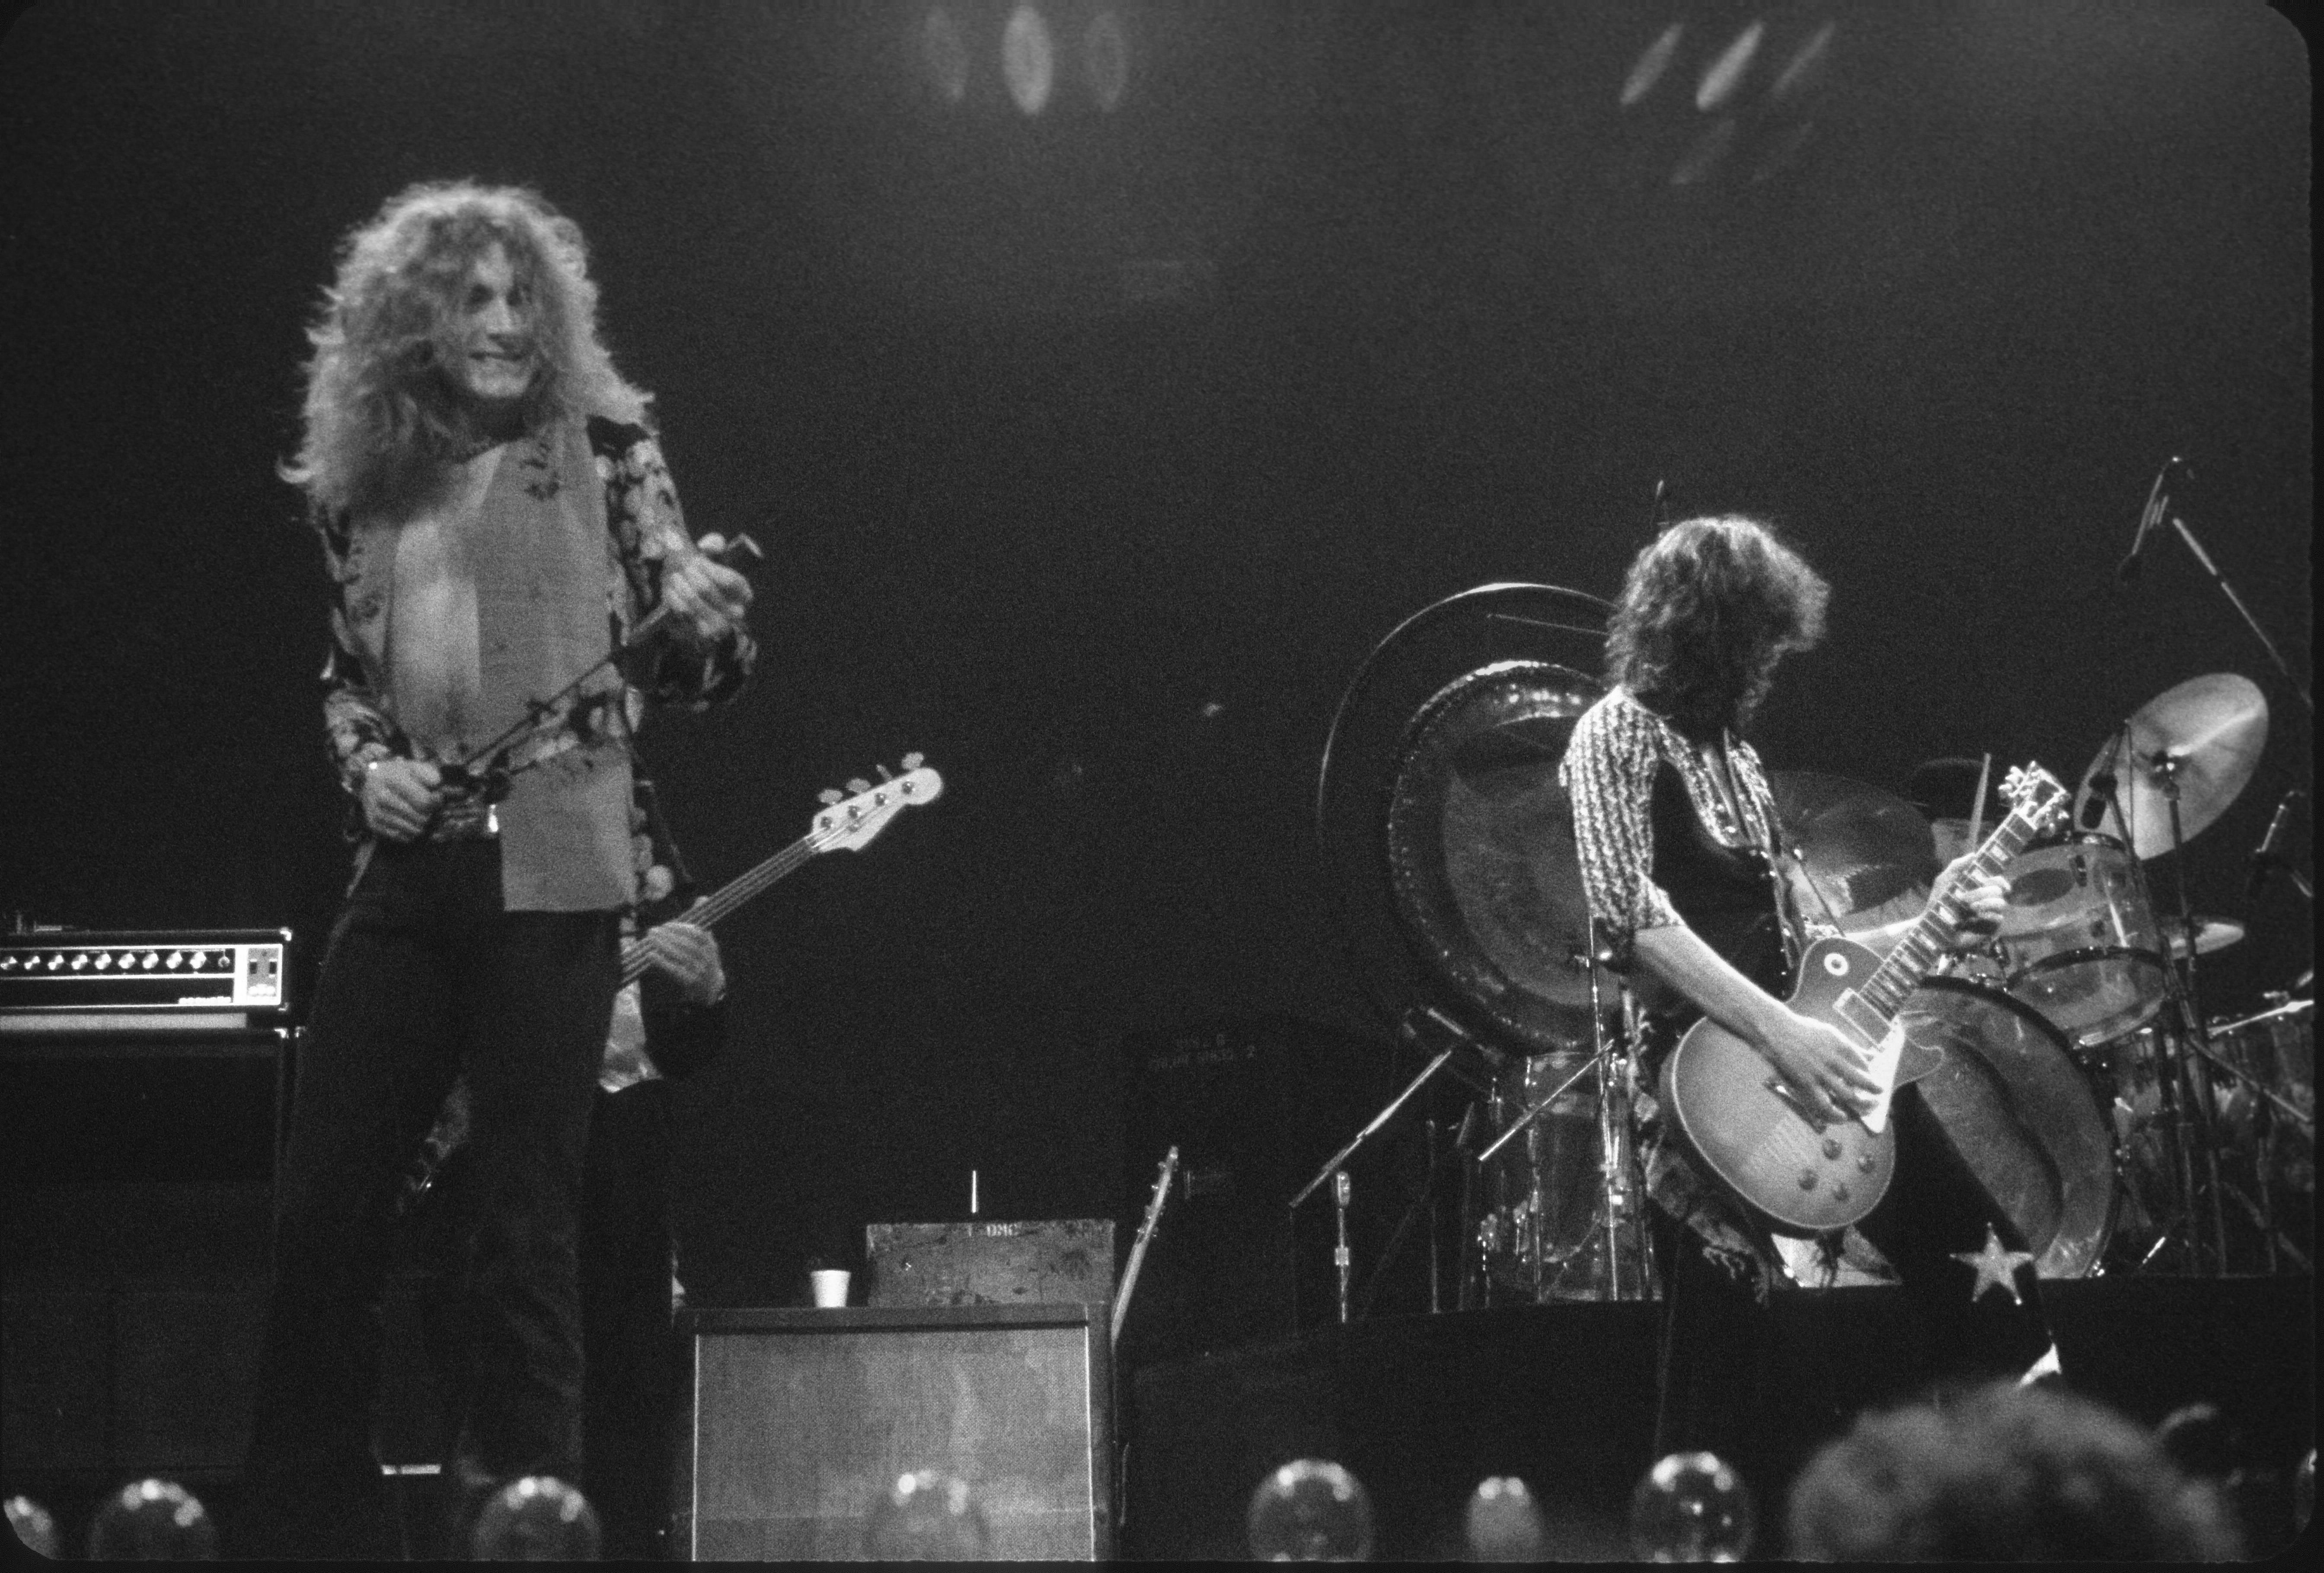 David Plastik Portrait Photograph - Robert Plant and Jimmy Page of Led Zeppelin Performing Fine Art Print